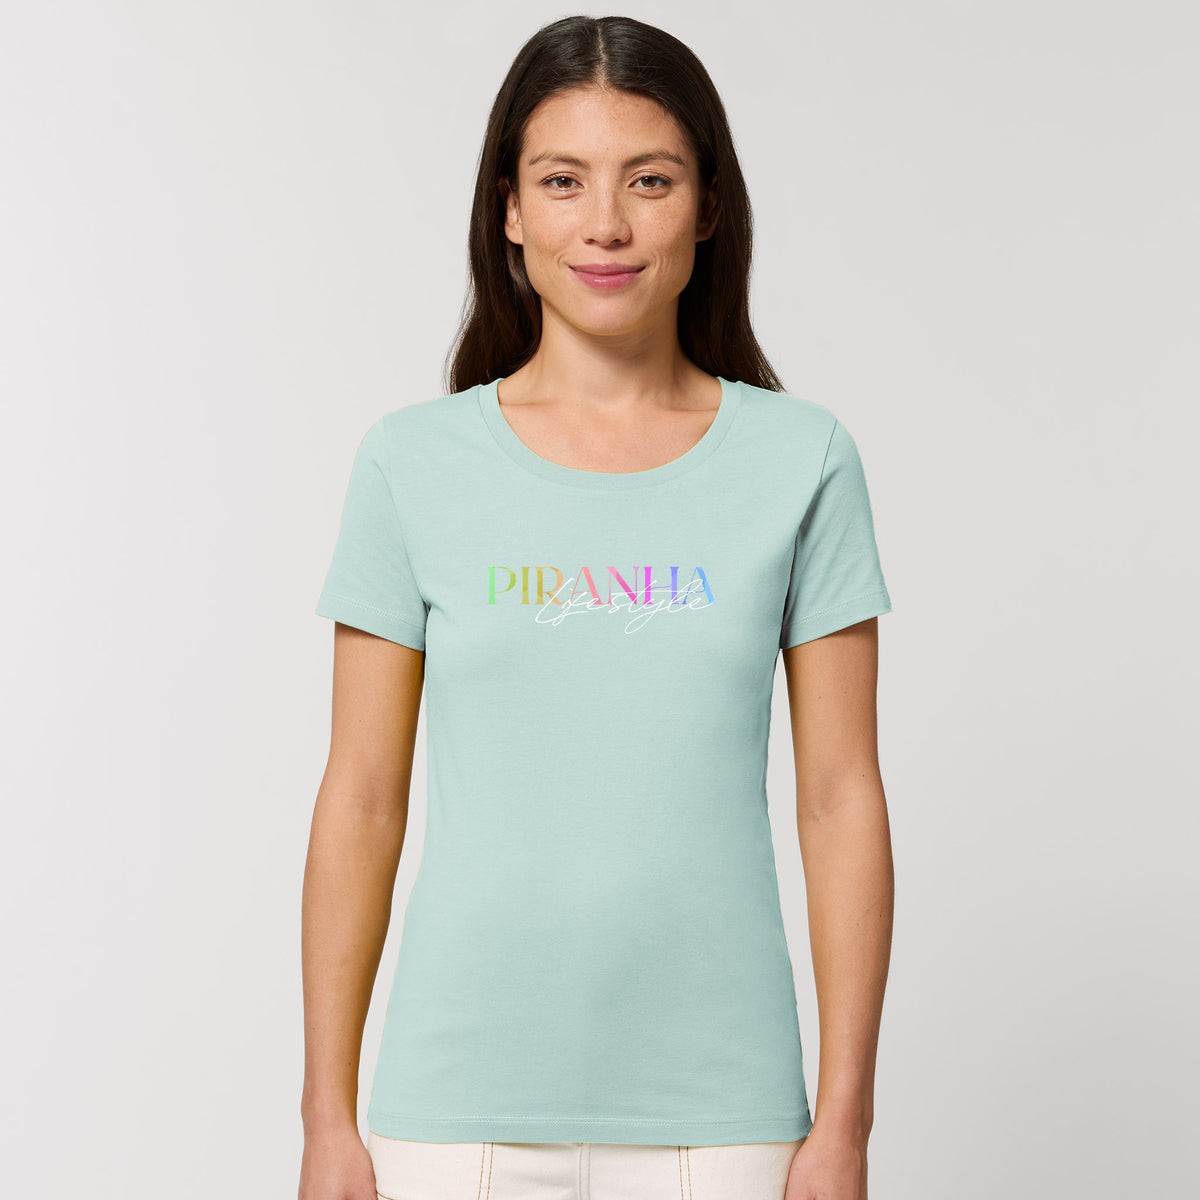 Piranha Lifestyle Womens Fitted T-Shirt: Caribbean Blue